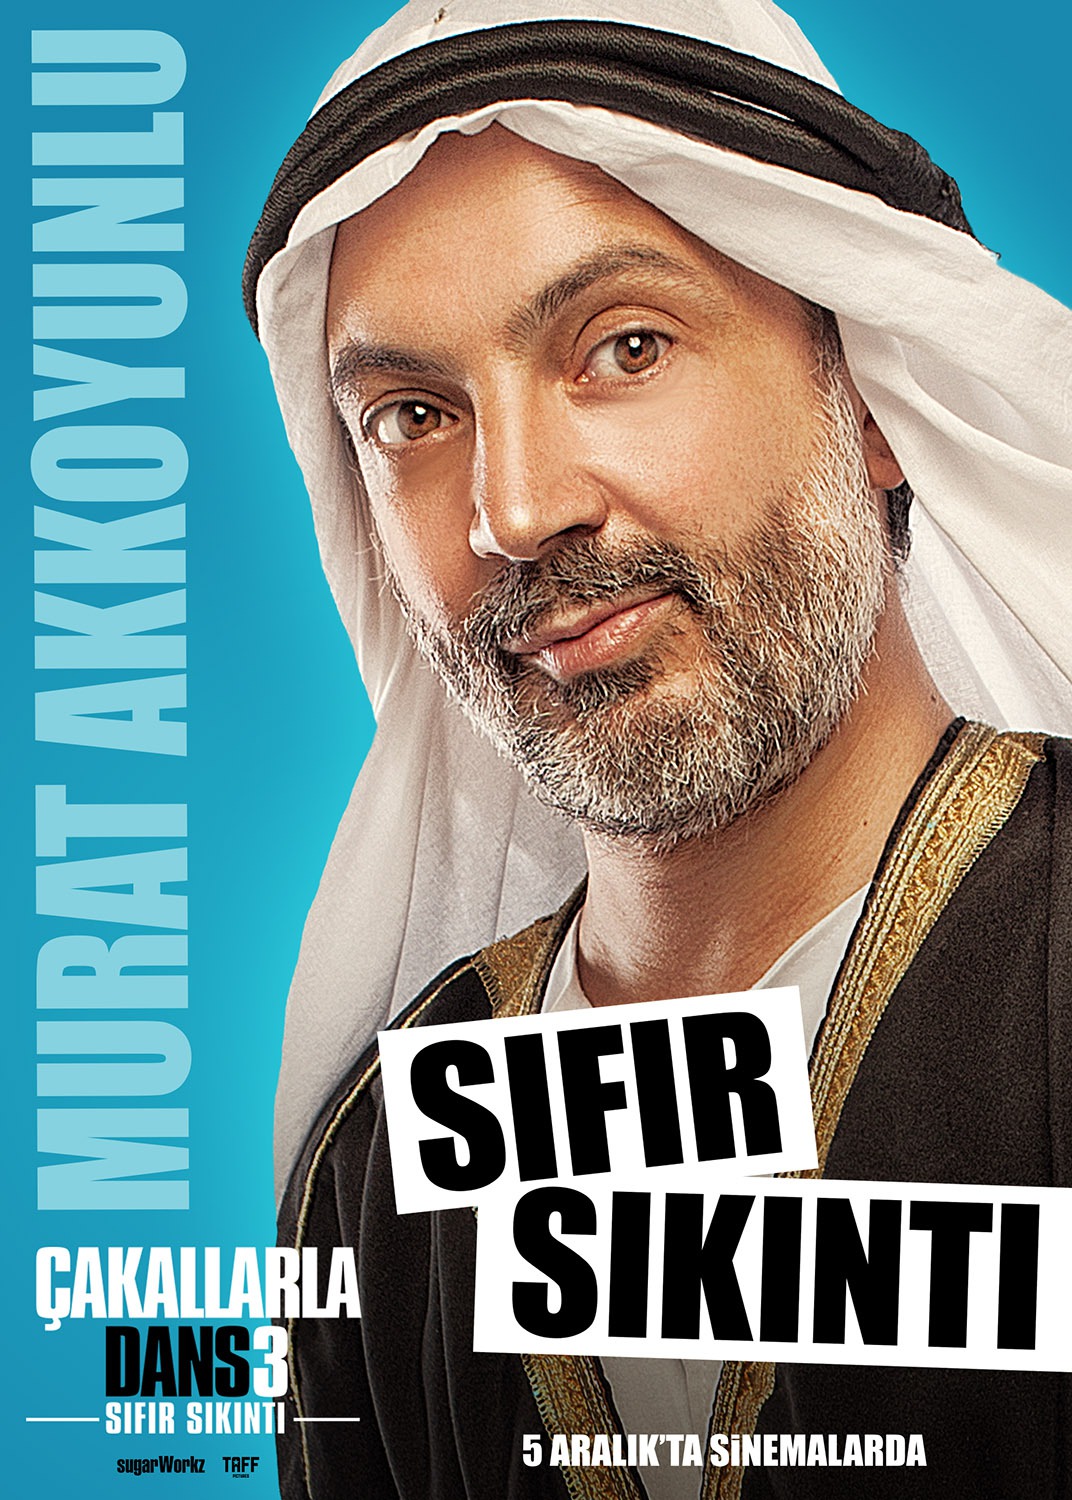 Extra Large Movie Poster Image for Çakallarla Dans 3: Sifir Sikinti (#3 of 9)